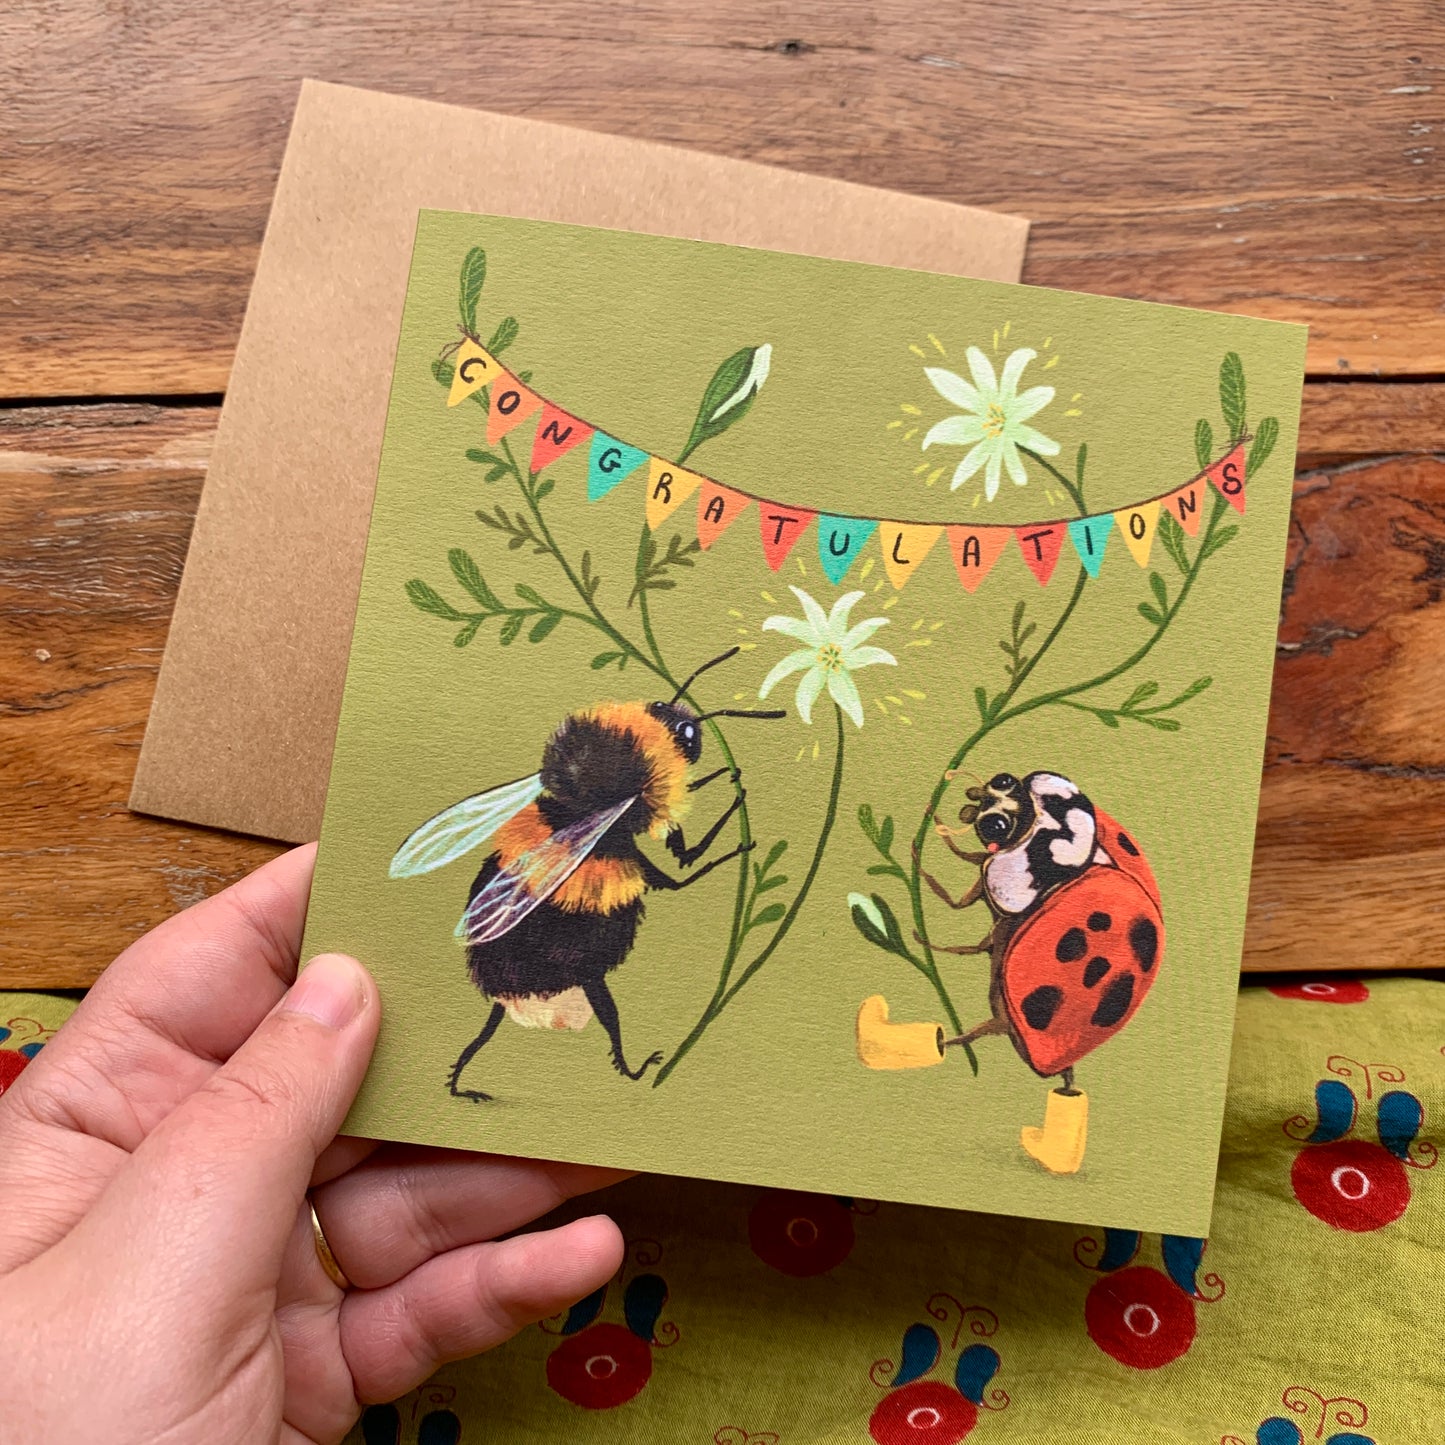 Anna Seed Art | Occasion Card - Congratulations! Cute bug illustration